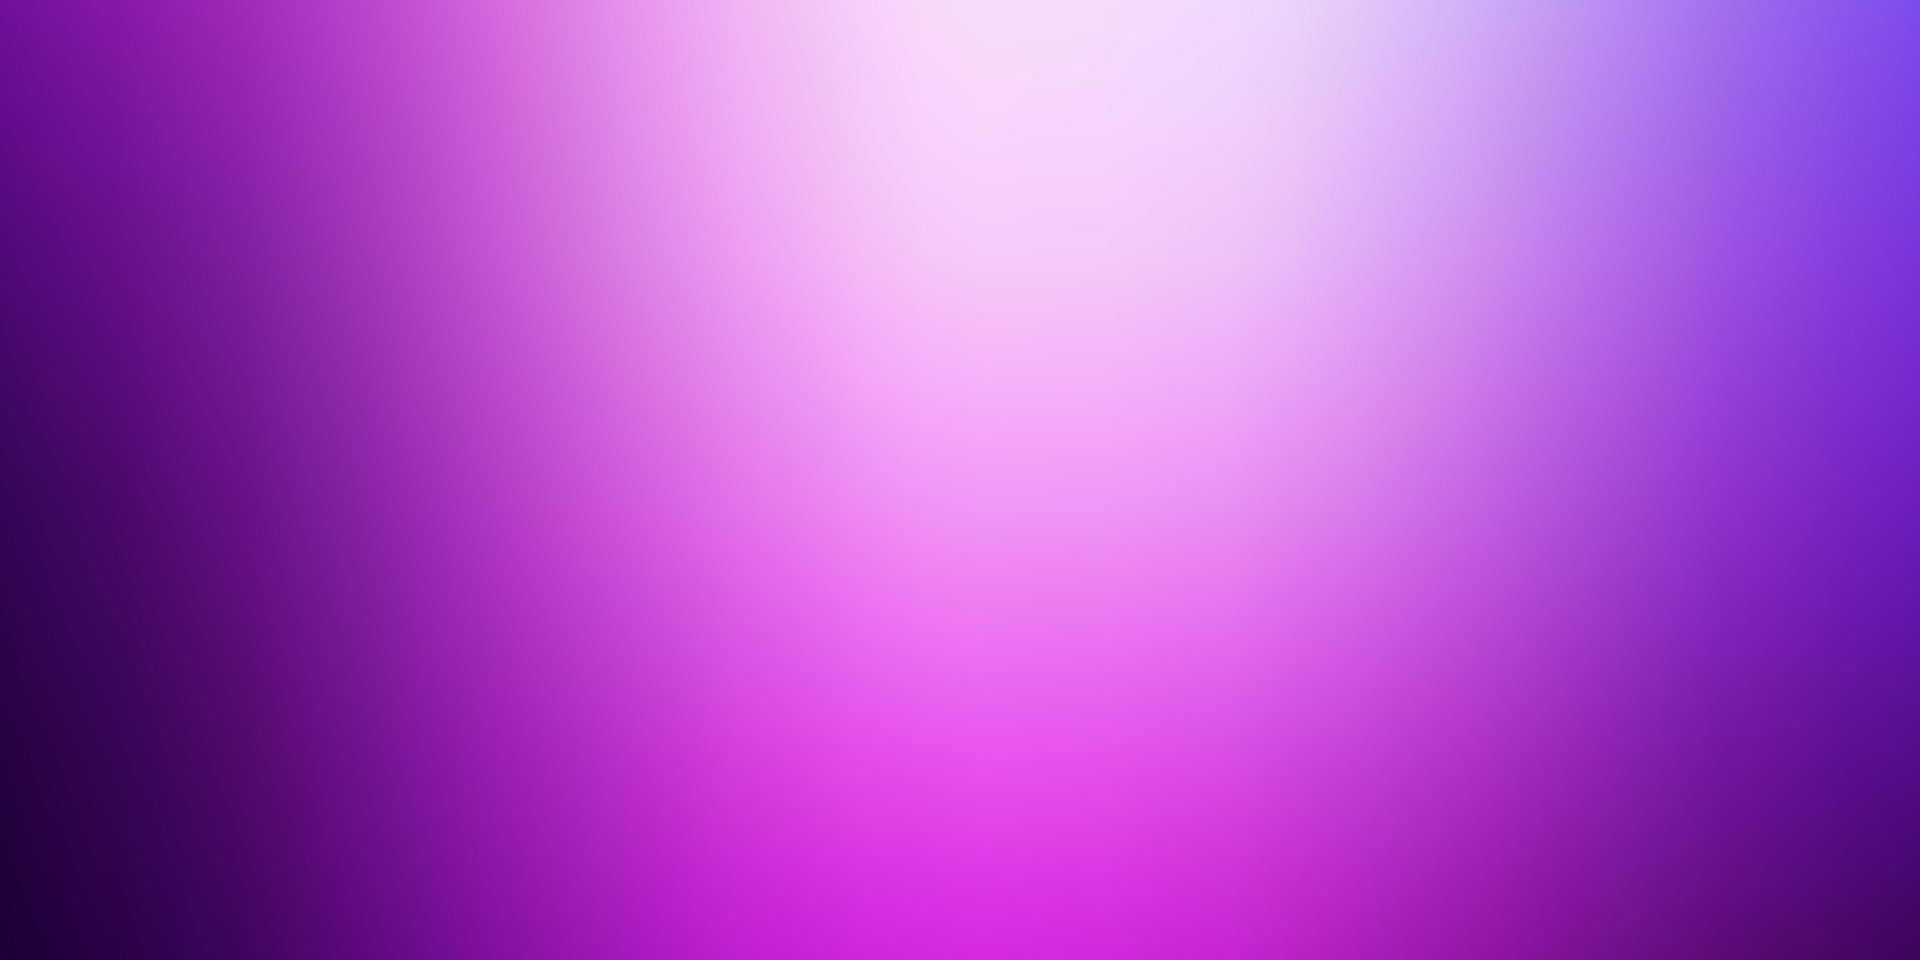 Light Purple vector abstract layout.